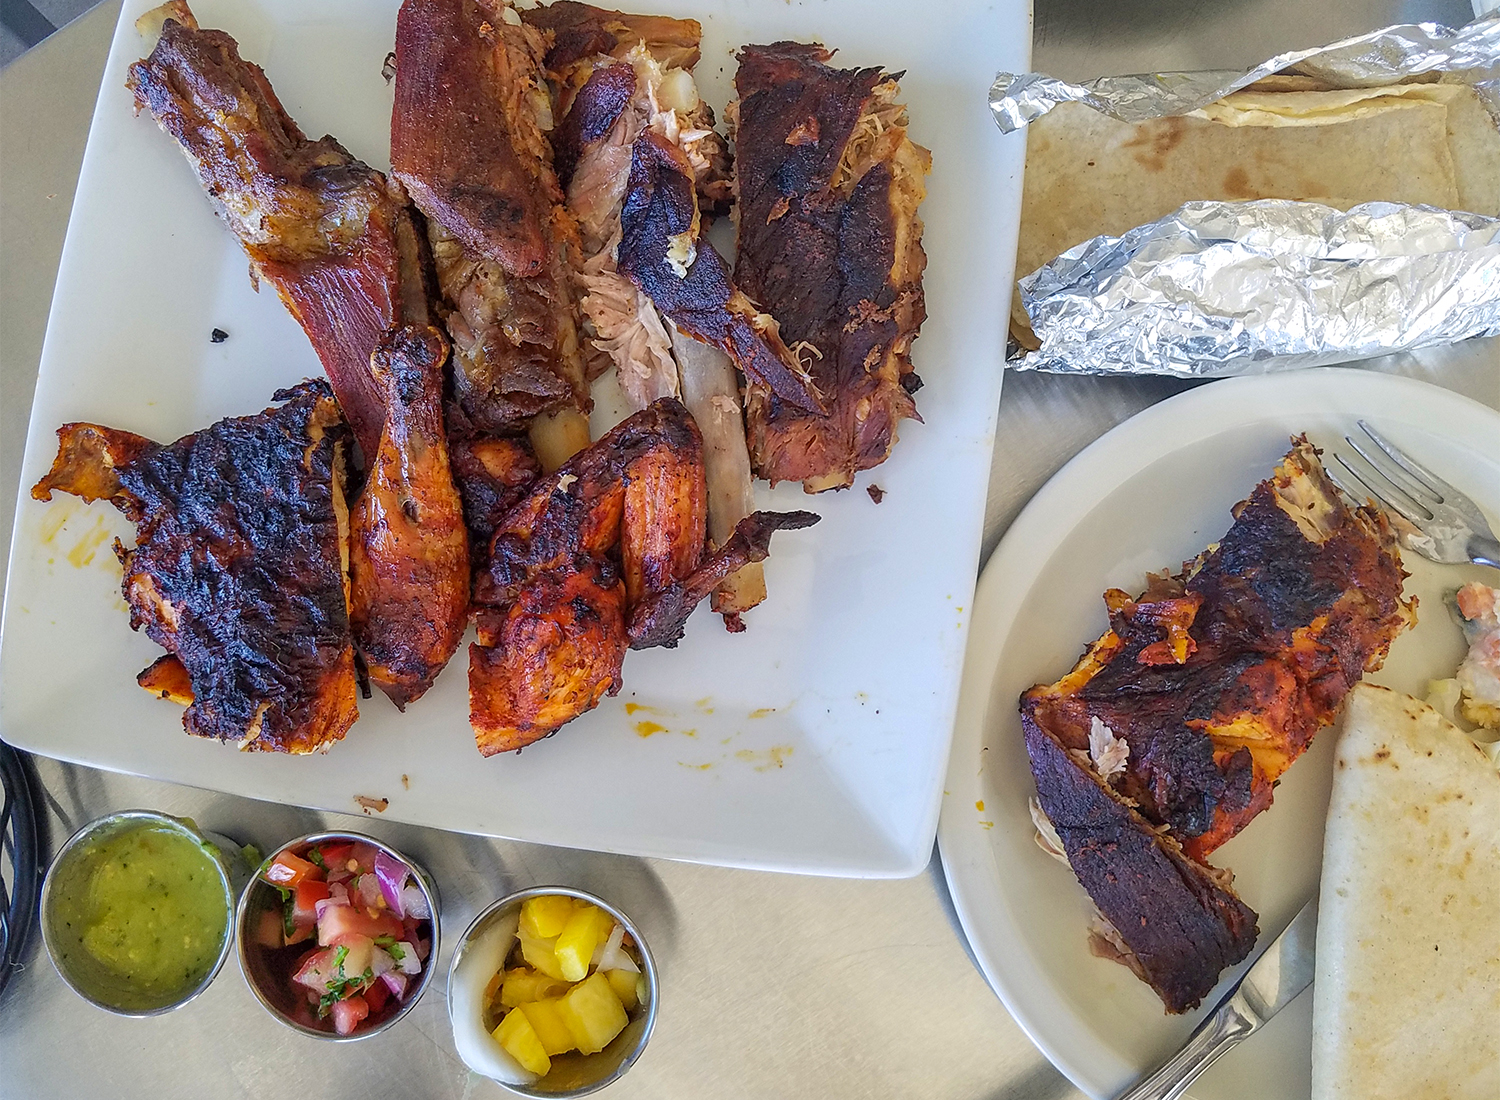 Petaluma BBQ spot features barbecue chicken, ribs, fresh salsas and tortillas. Heather Irwin/PD